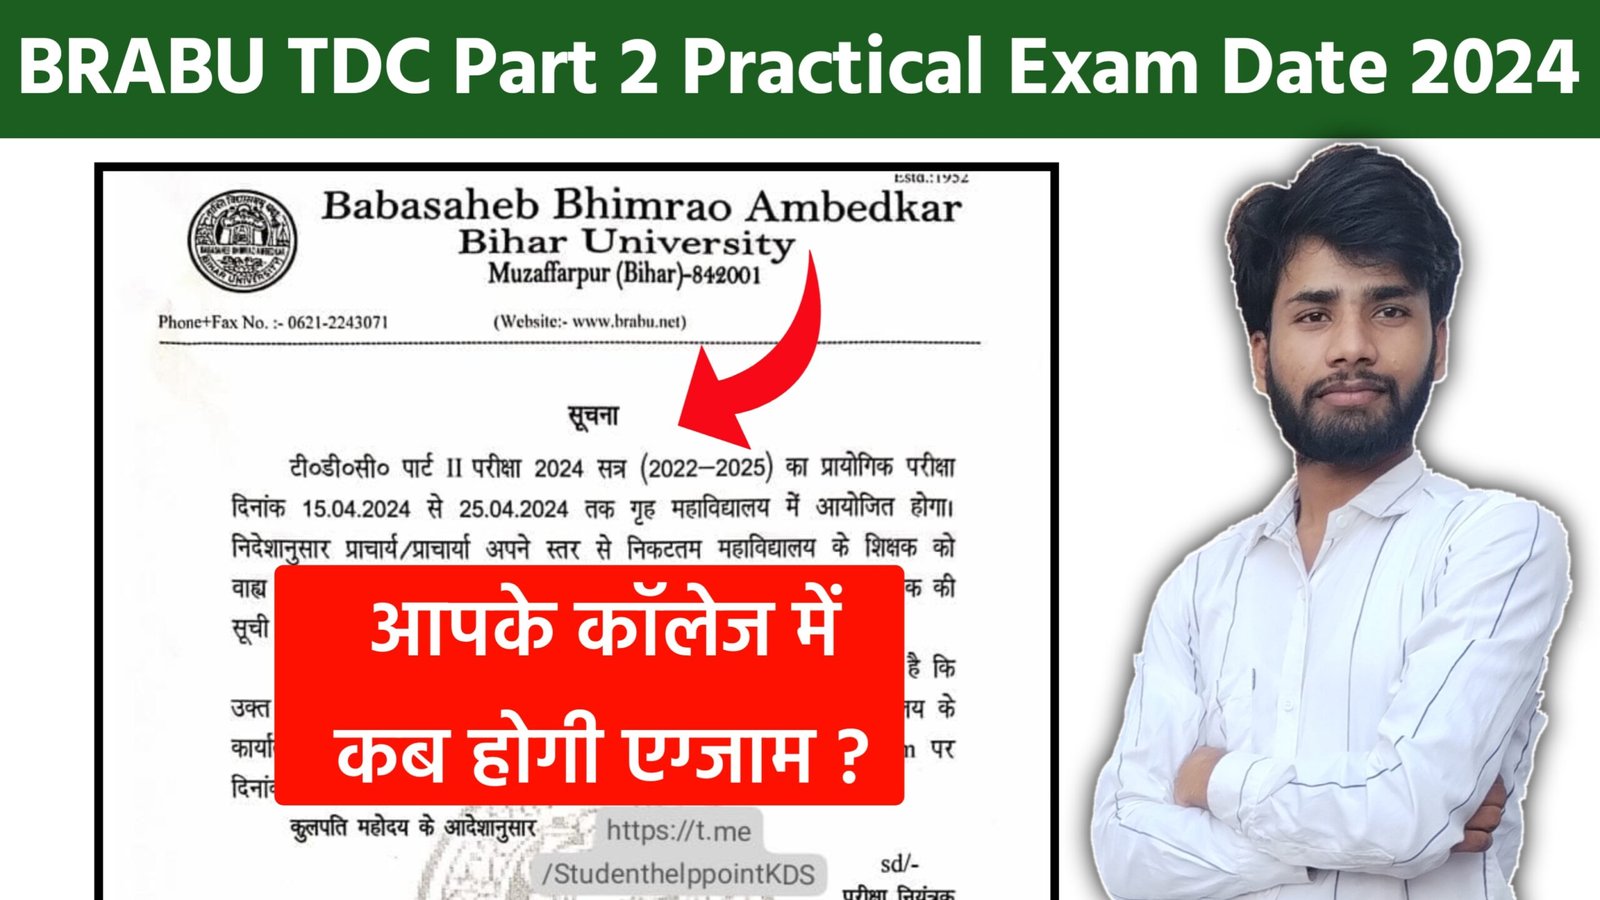 BRABU TDC Part 2 Practical Exam Date 2024